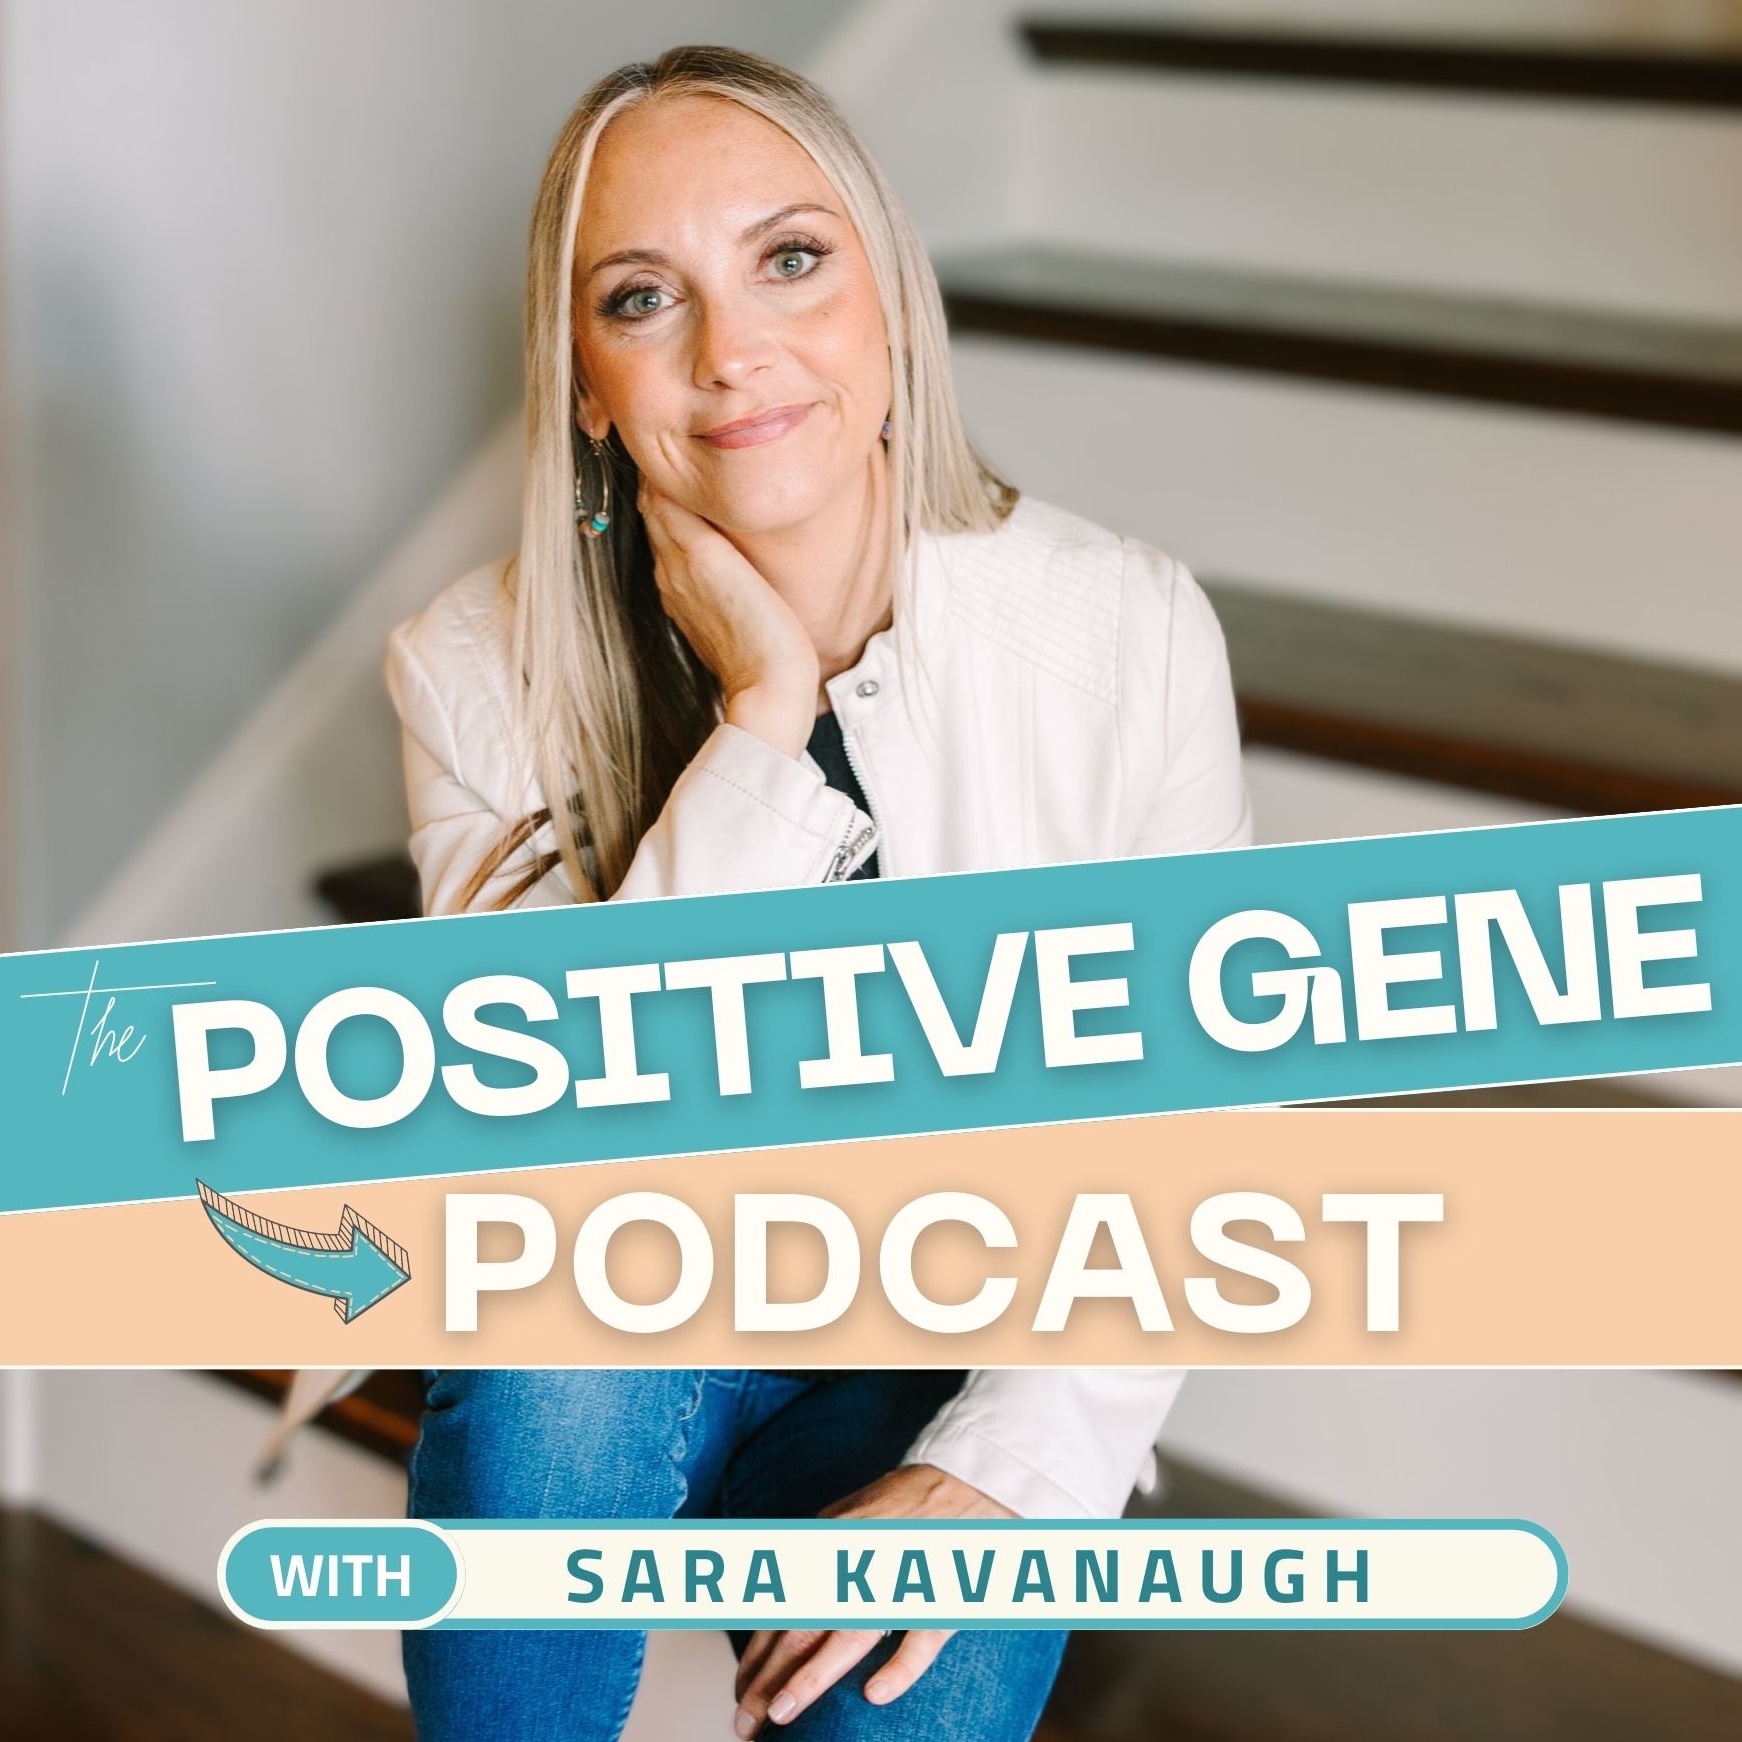 The Positive Gene Podcast